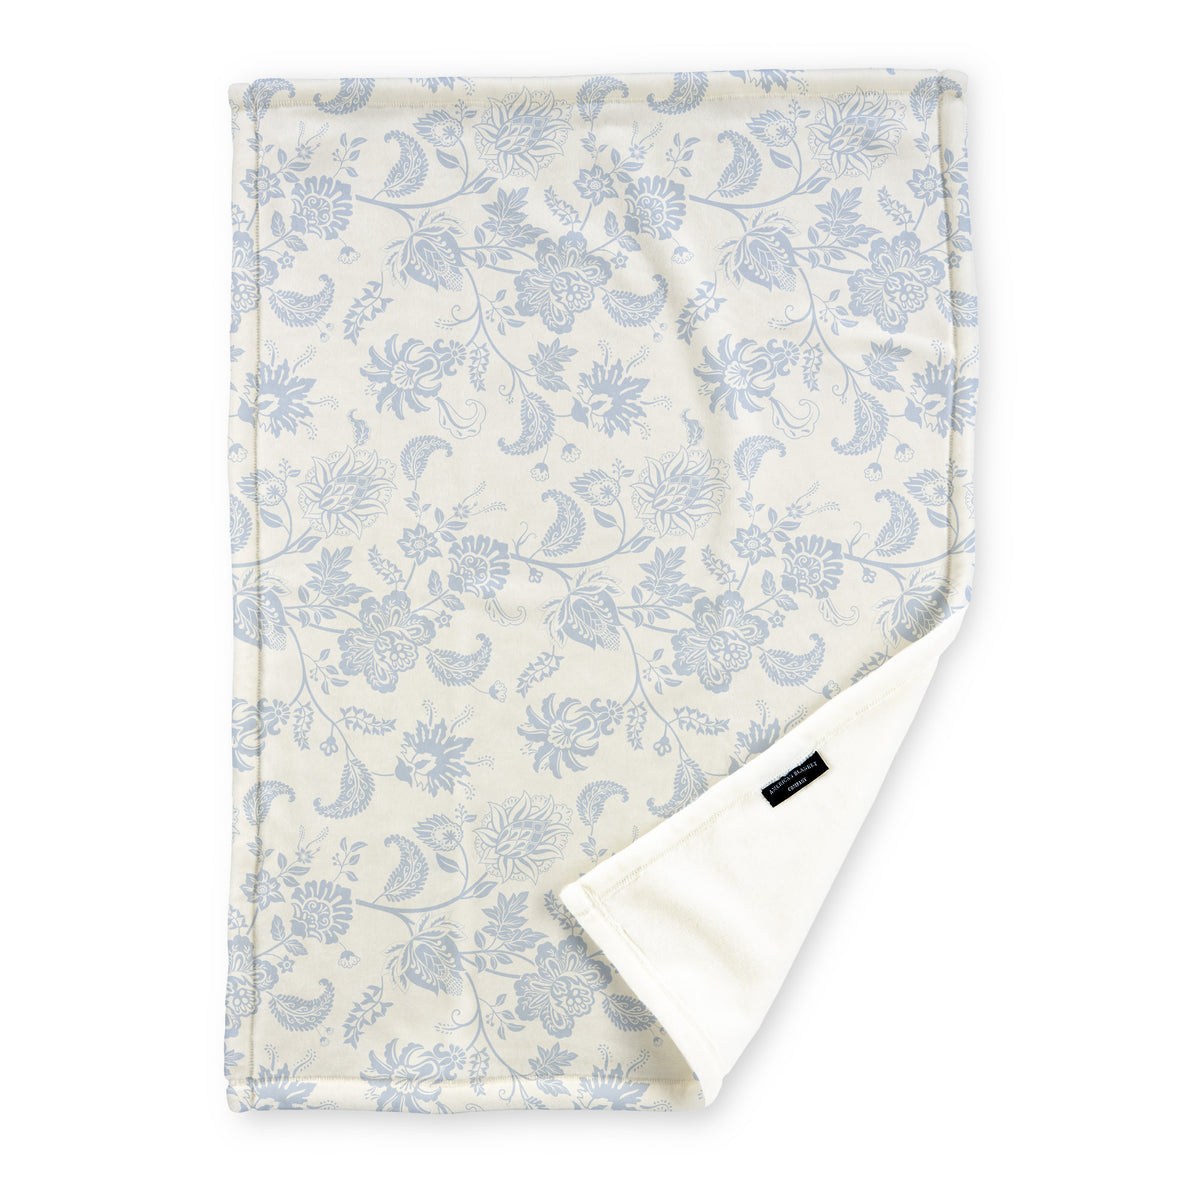 Printed Fleece Throw Blankets | Floral Print Fashion Throws